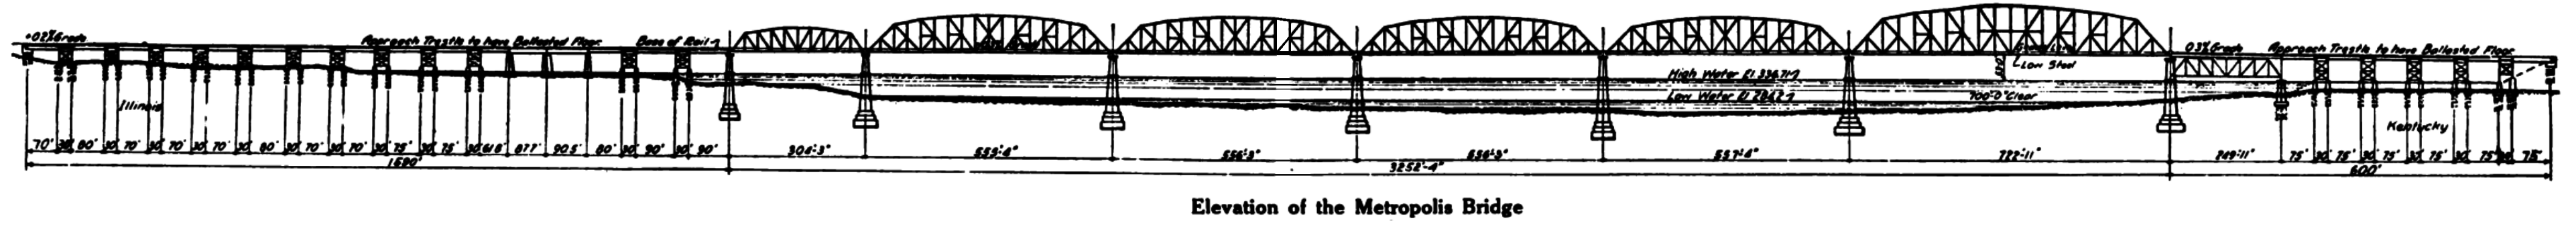 Elevation of Metropolis Bridge